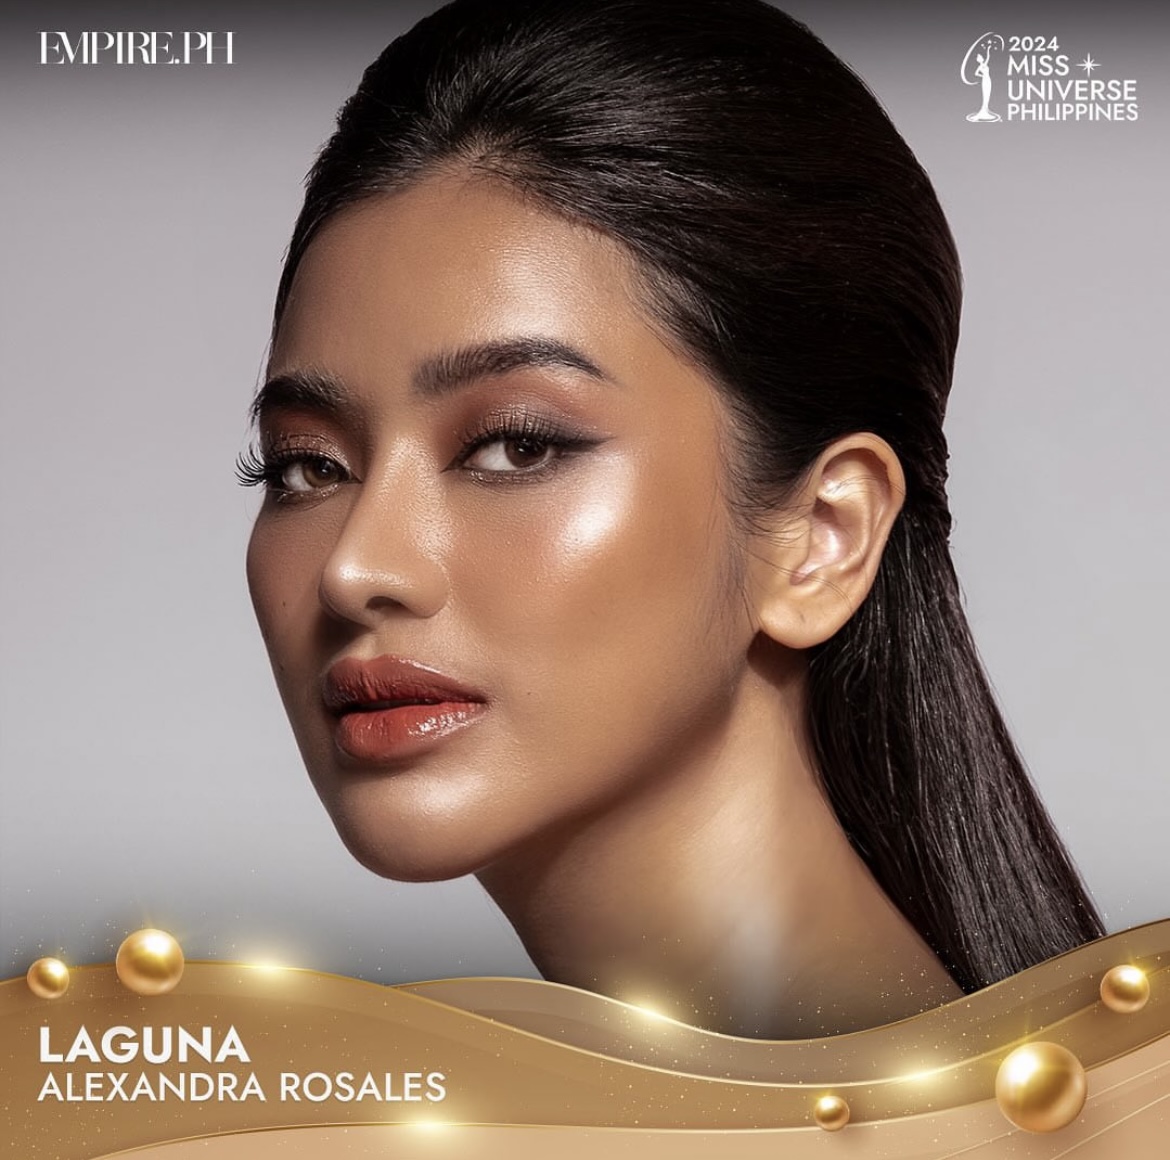  Miss Universe Philippines 2024 Laguna Alexandra Rosales